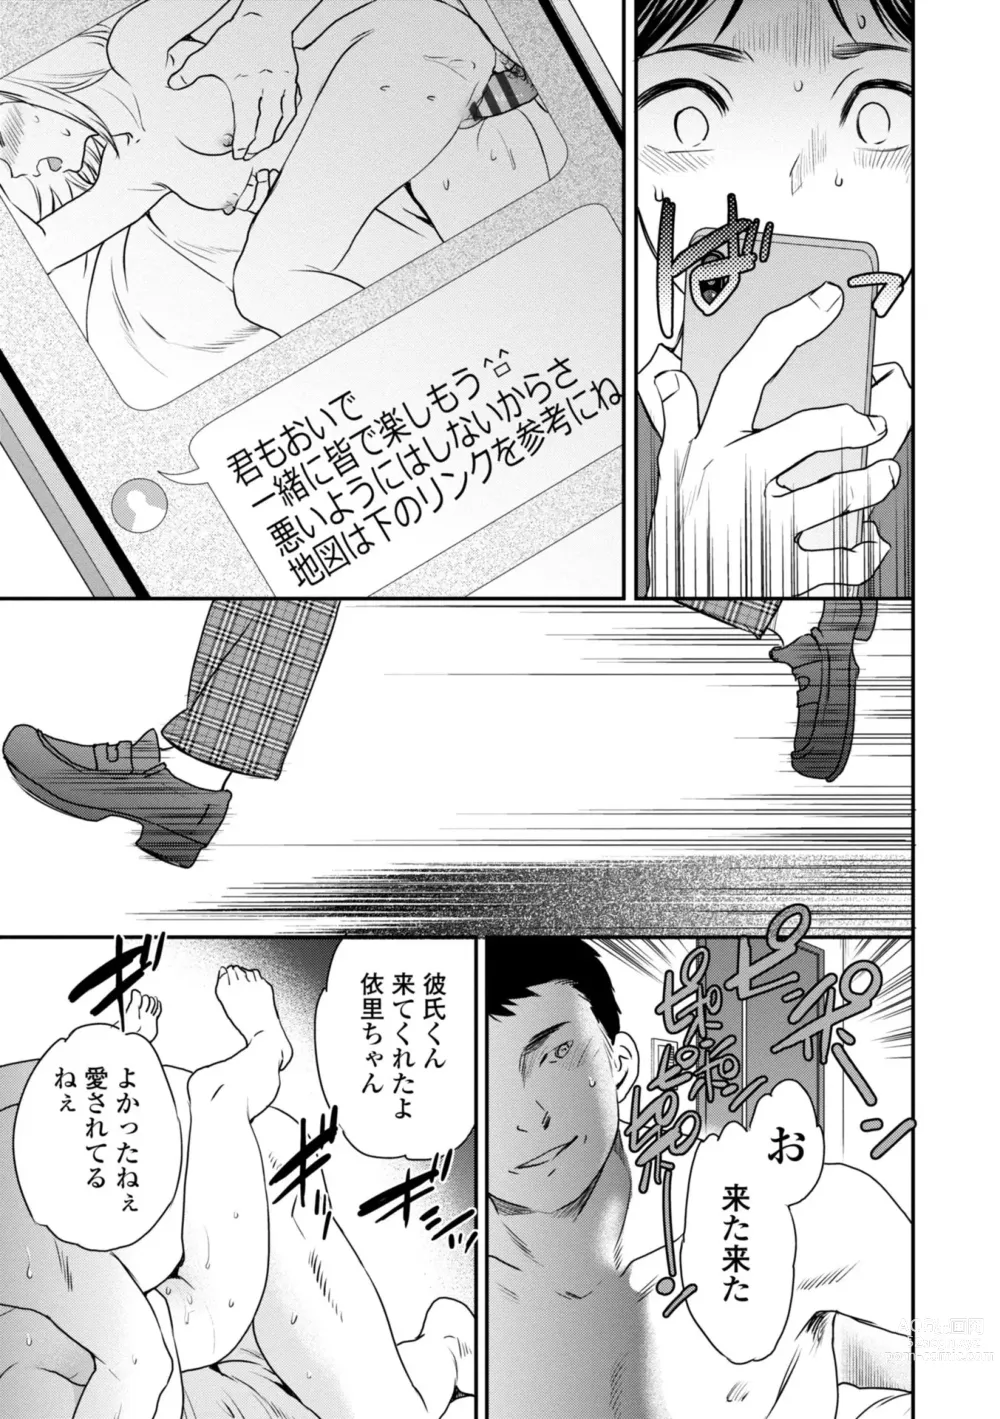 Page 19 of manga Virginity